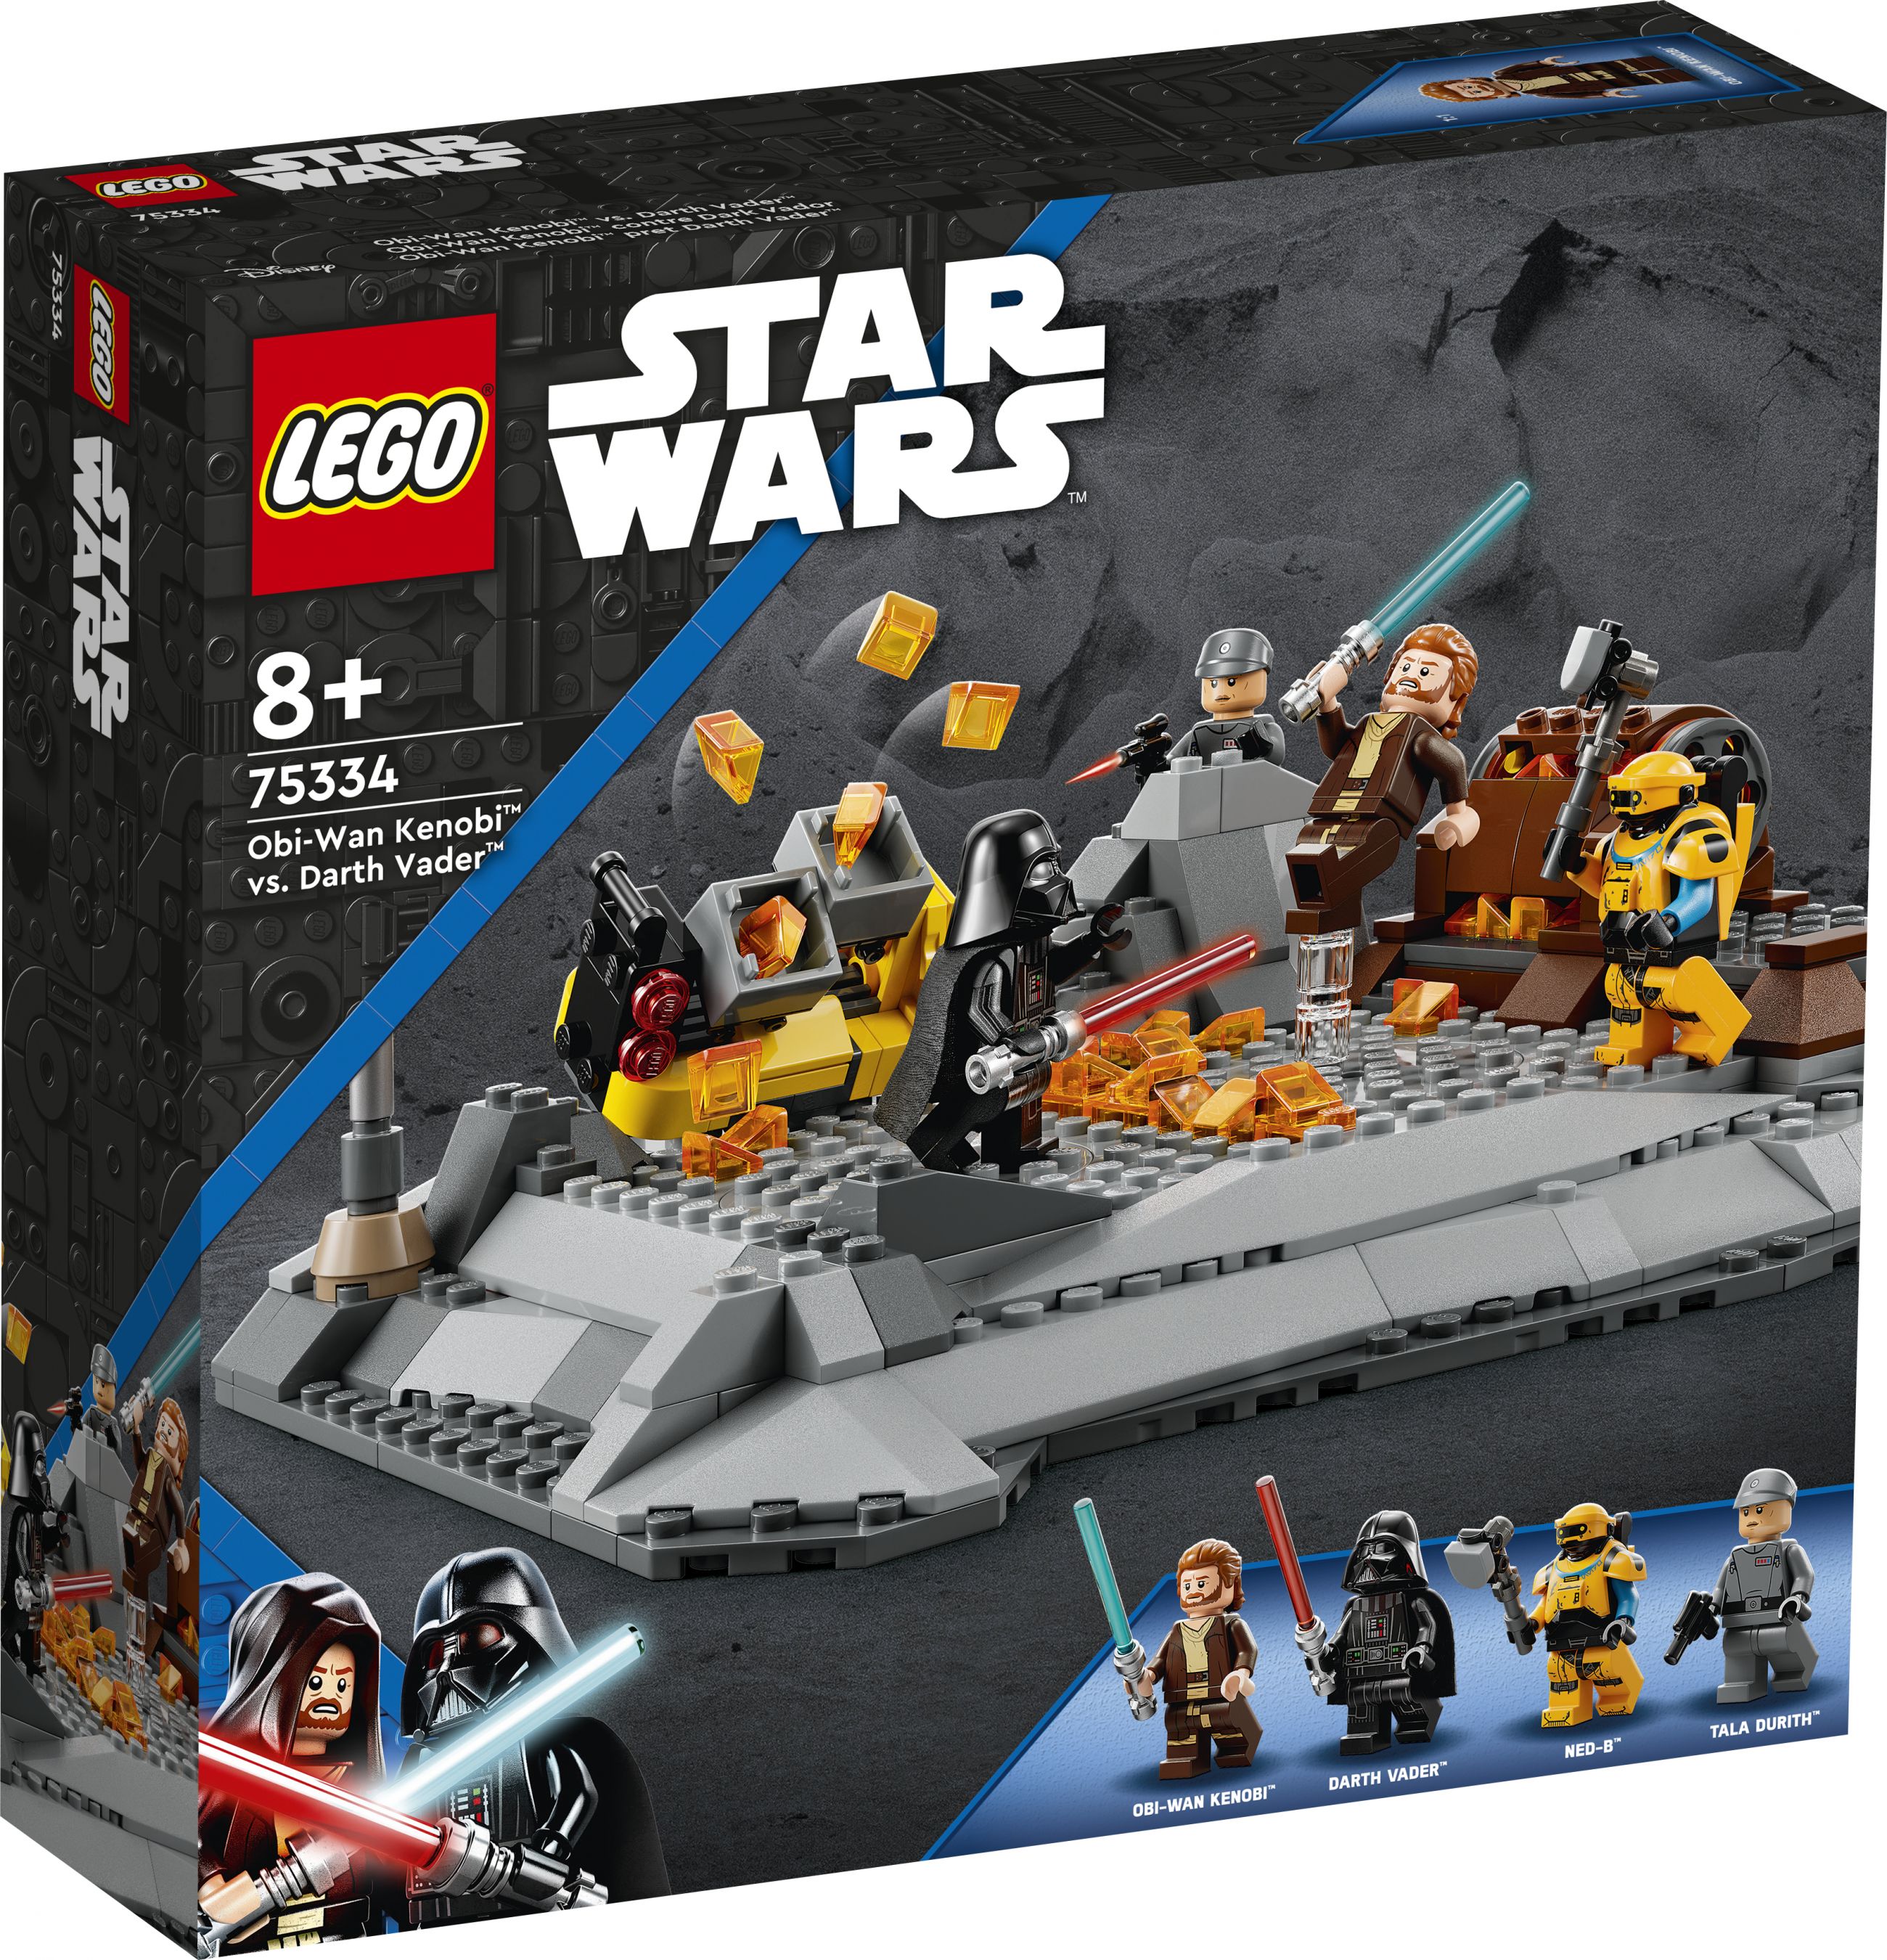 LEGO Star Wars 75334 Obi-Wan Kenobi™ vs. Darth Vader™ LEGO_75334_Box1_v29.jpg